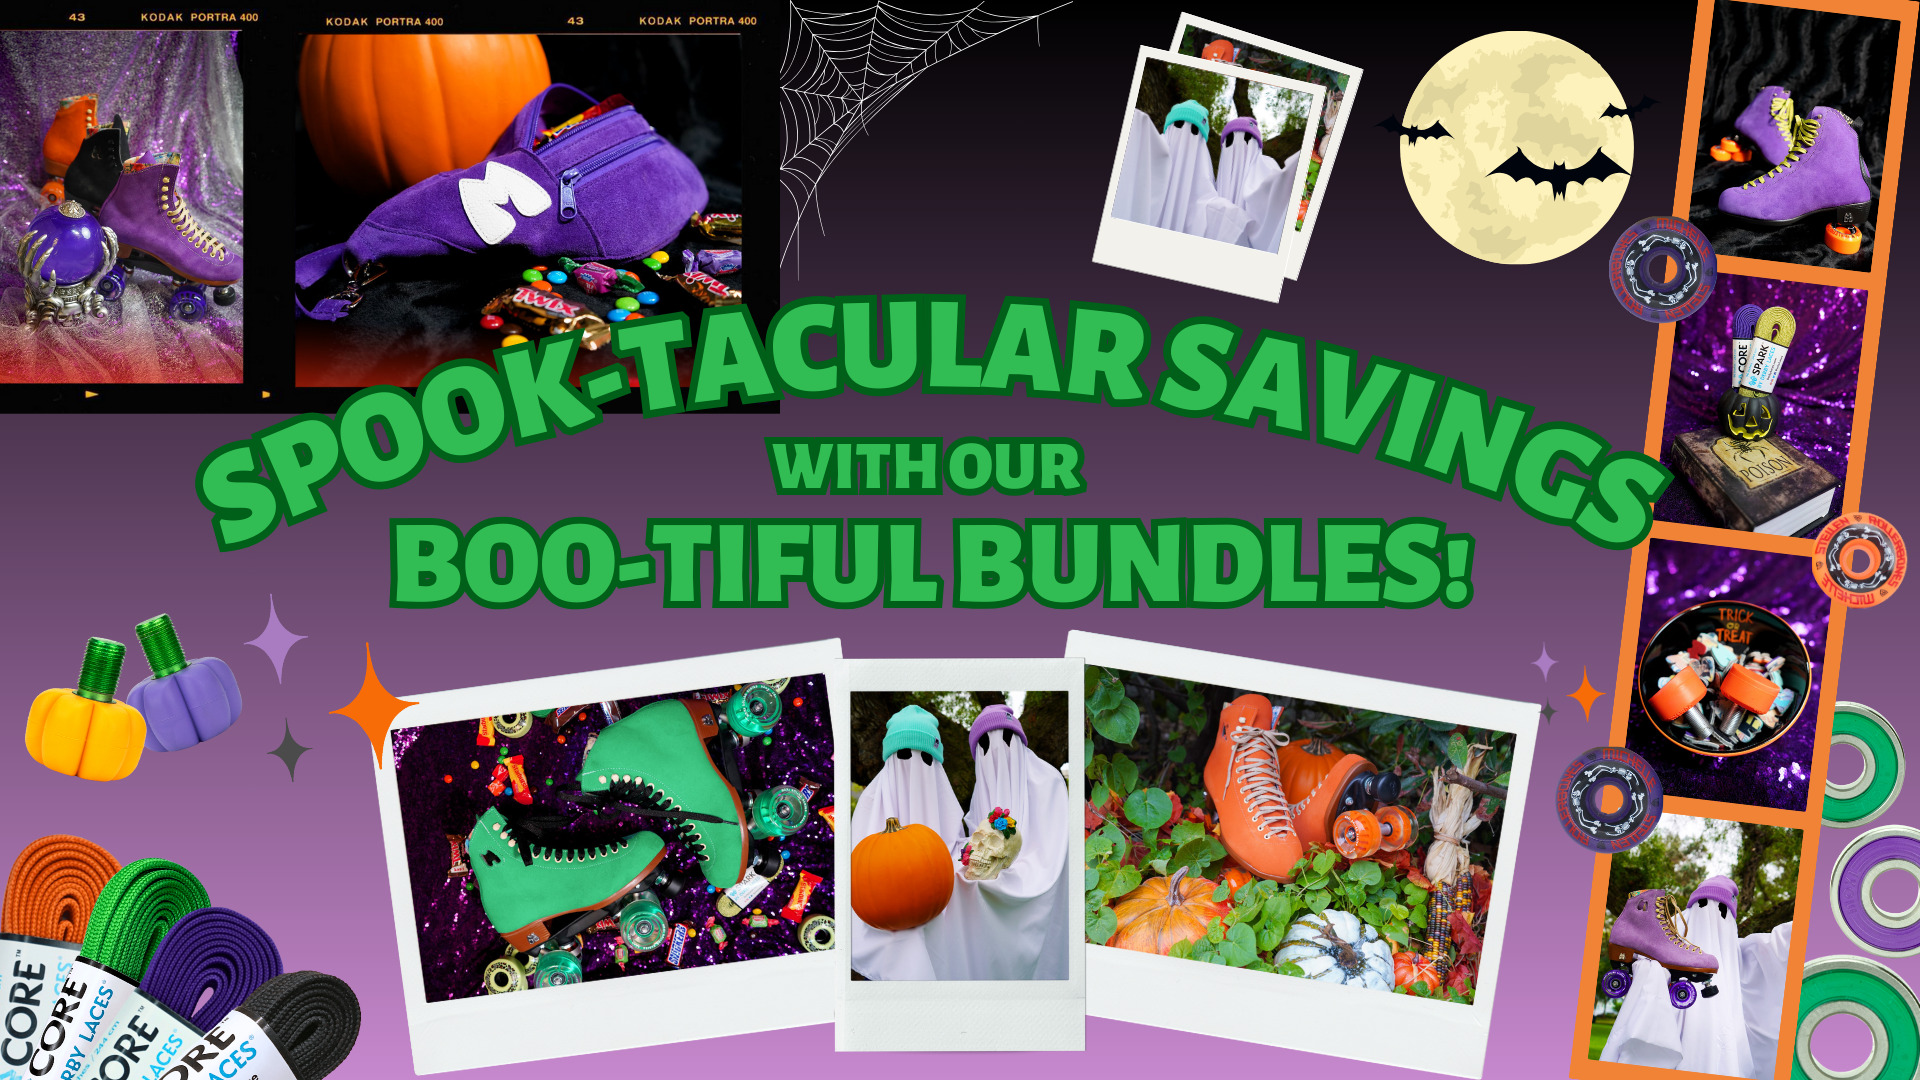 spook-tacular savings with our boo-tiful bundles